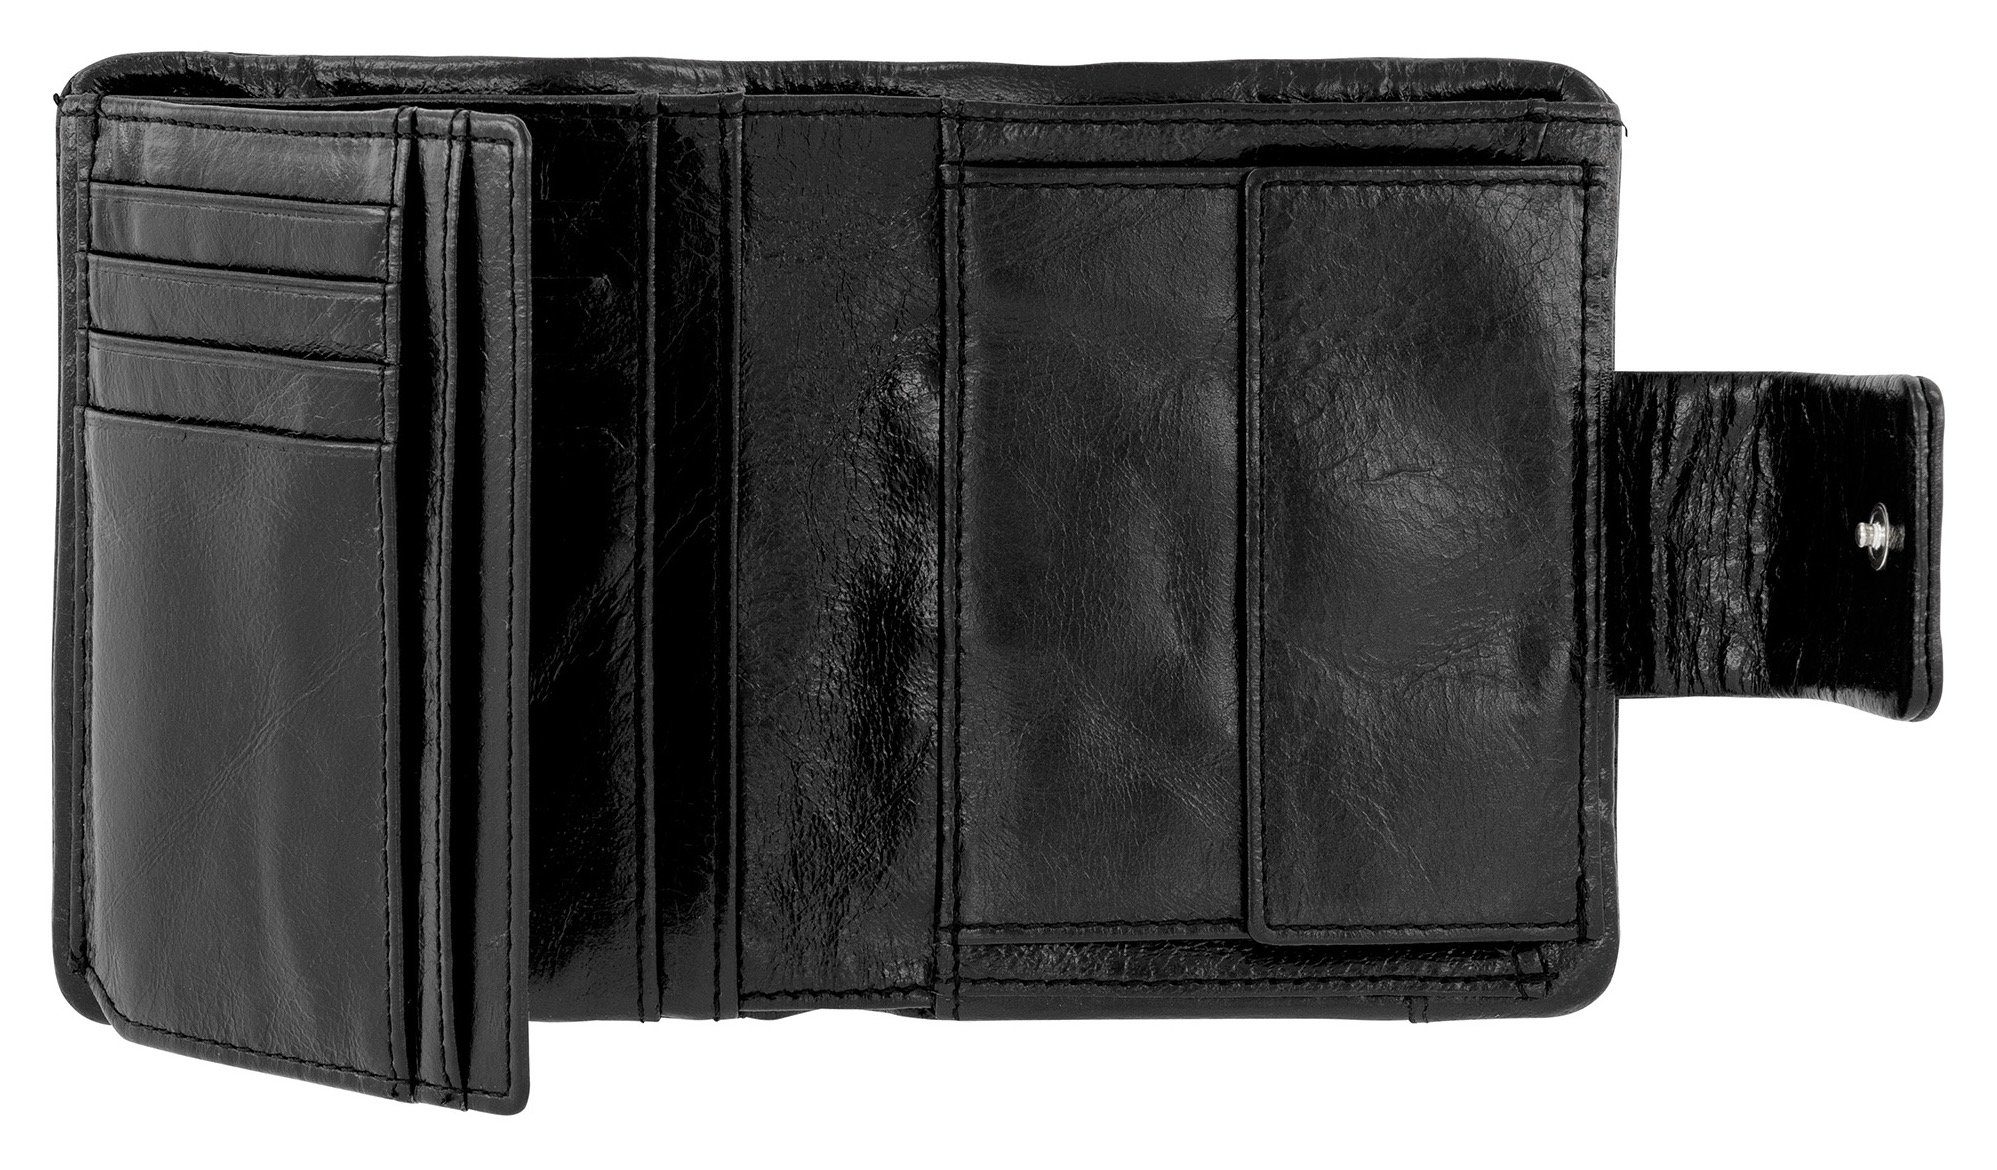 RISE Medium schwarz flap Geldbörse camel wallet, active Used-Look im